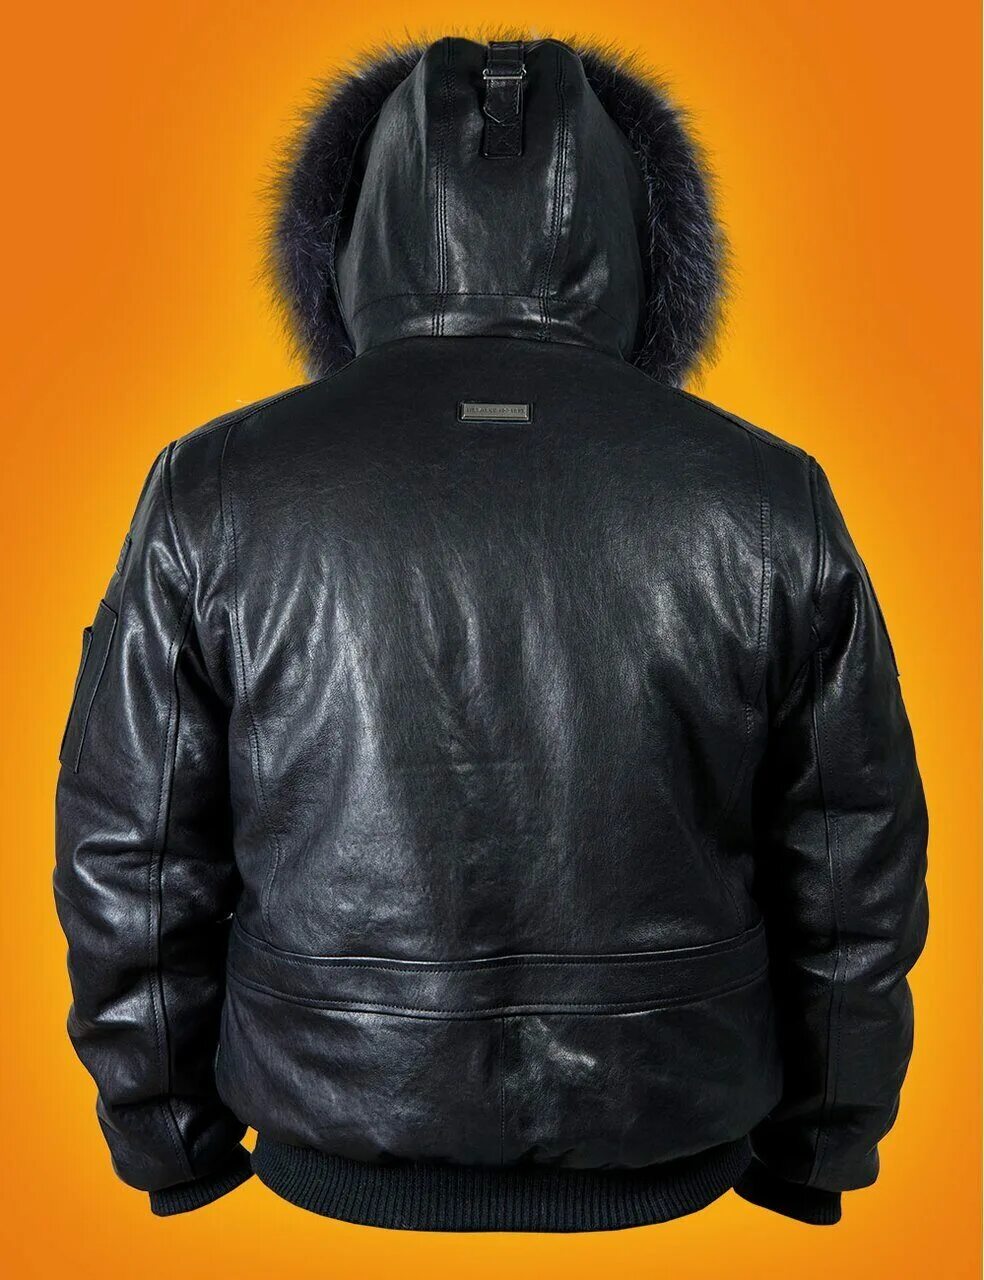 Аляска 90. Кожаная Аляска мужская. Аляска мужская mz135. Кожаная куртка Аляска с капюшоном мужская. Куртка Аляска мужская 90-х годов.